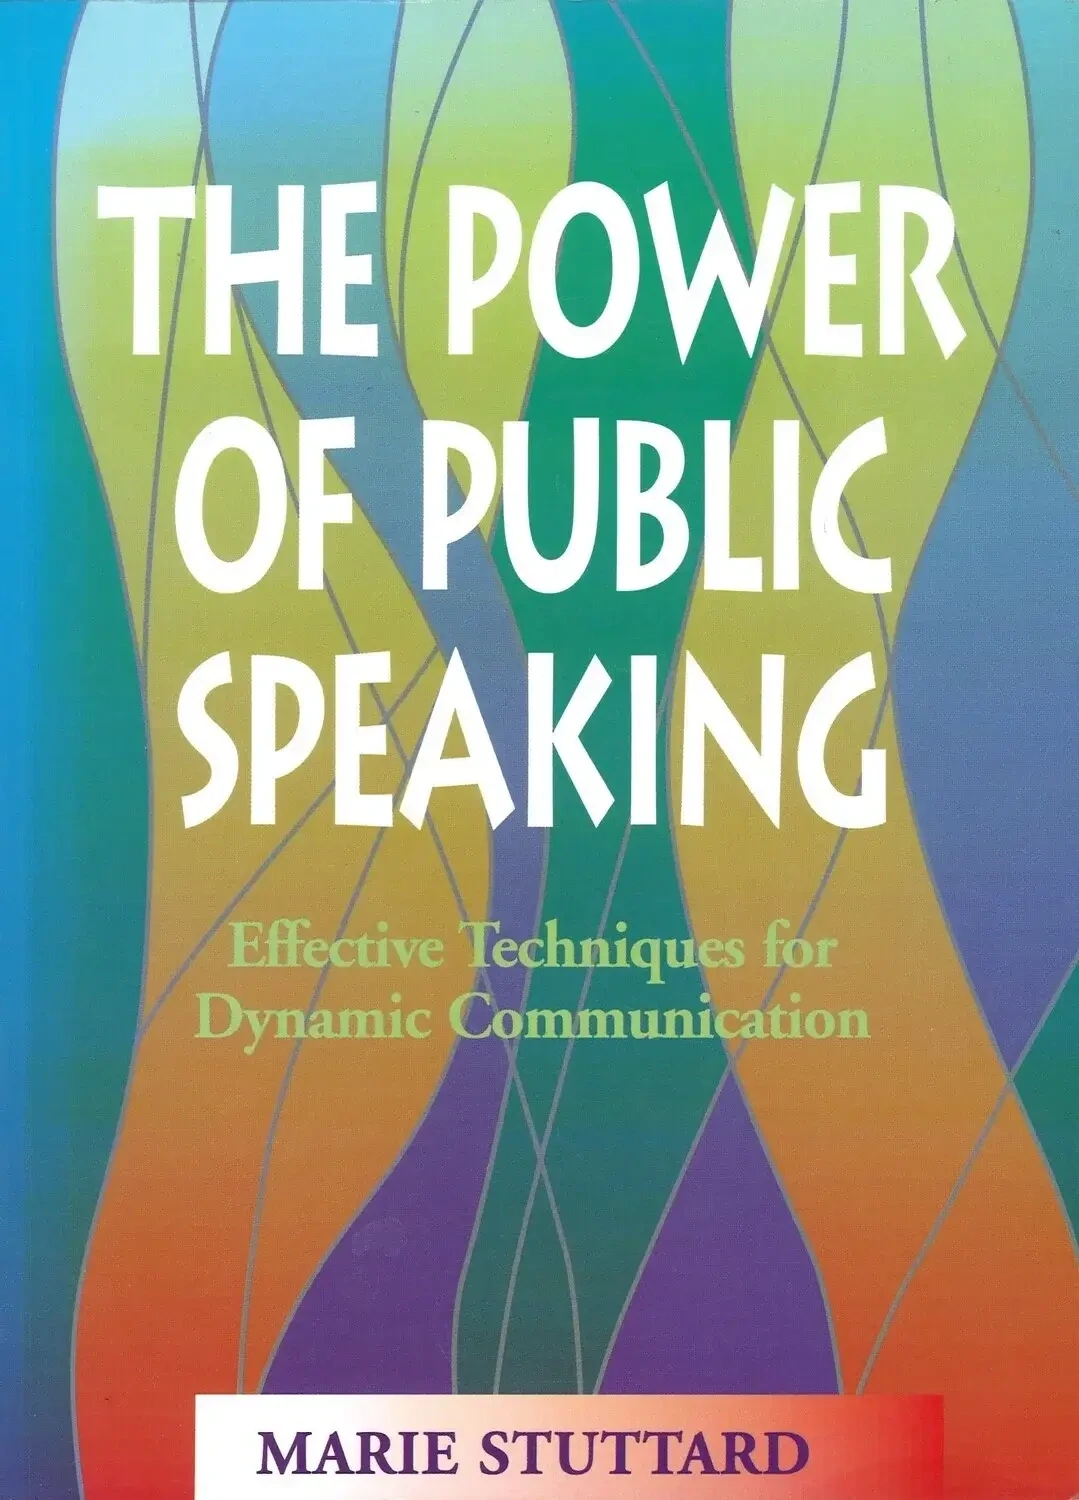 The Power of Public Speaking by Marie Stuttard